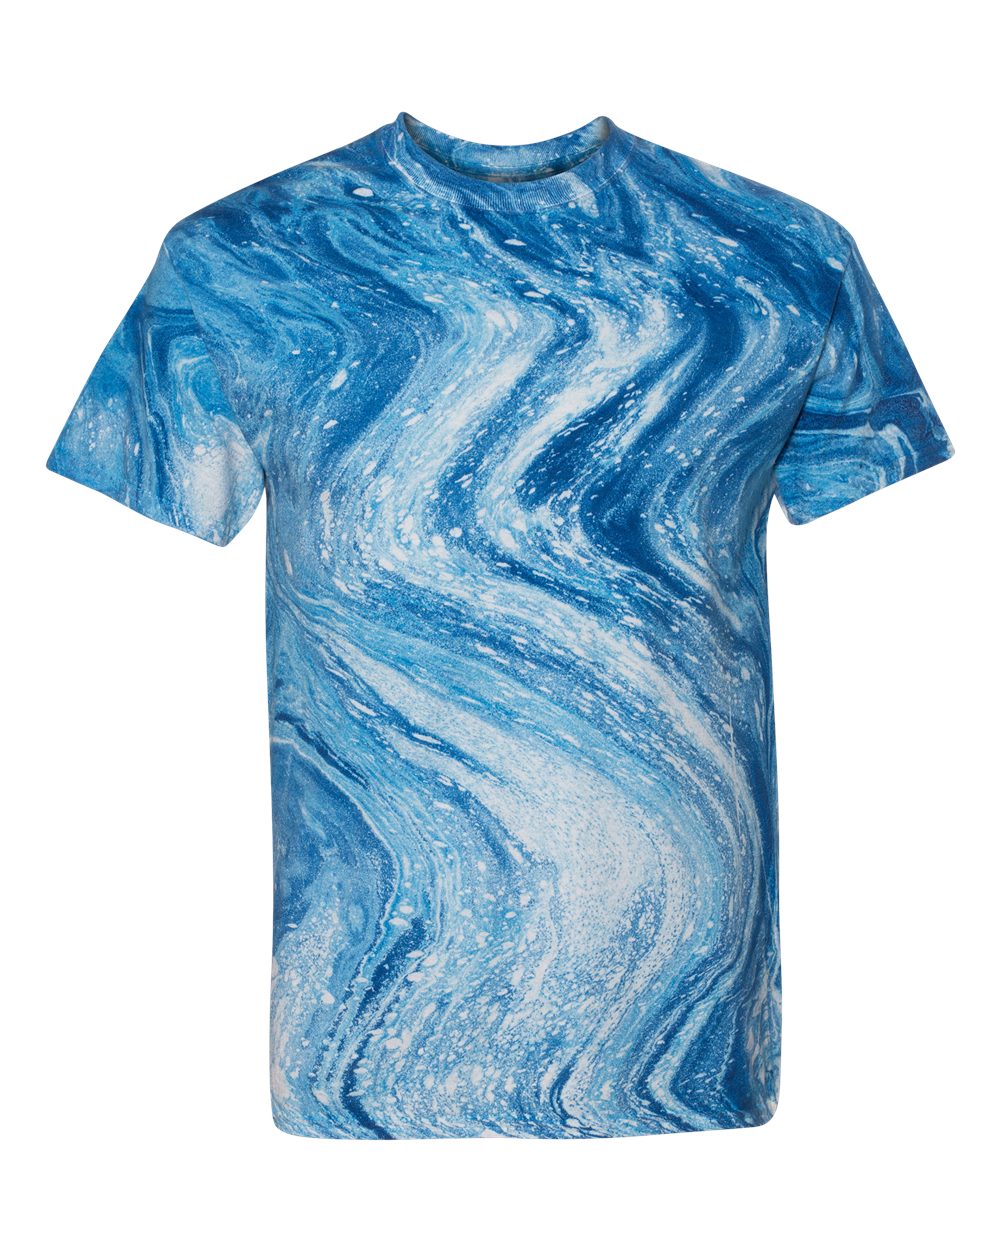 Unisex Marble Tie Dye T-Shirt